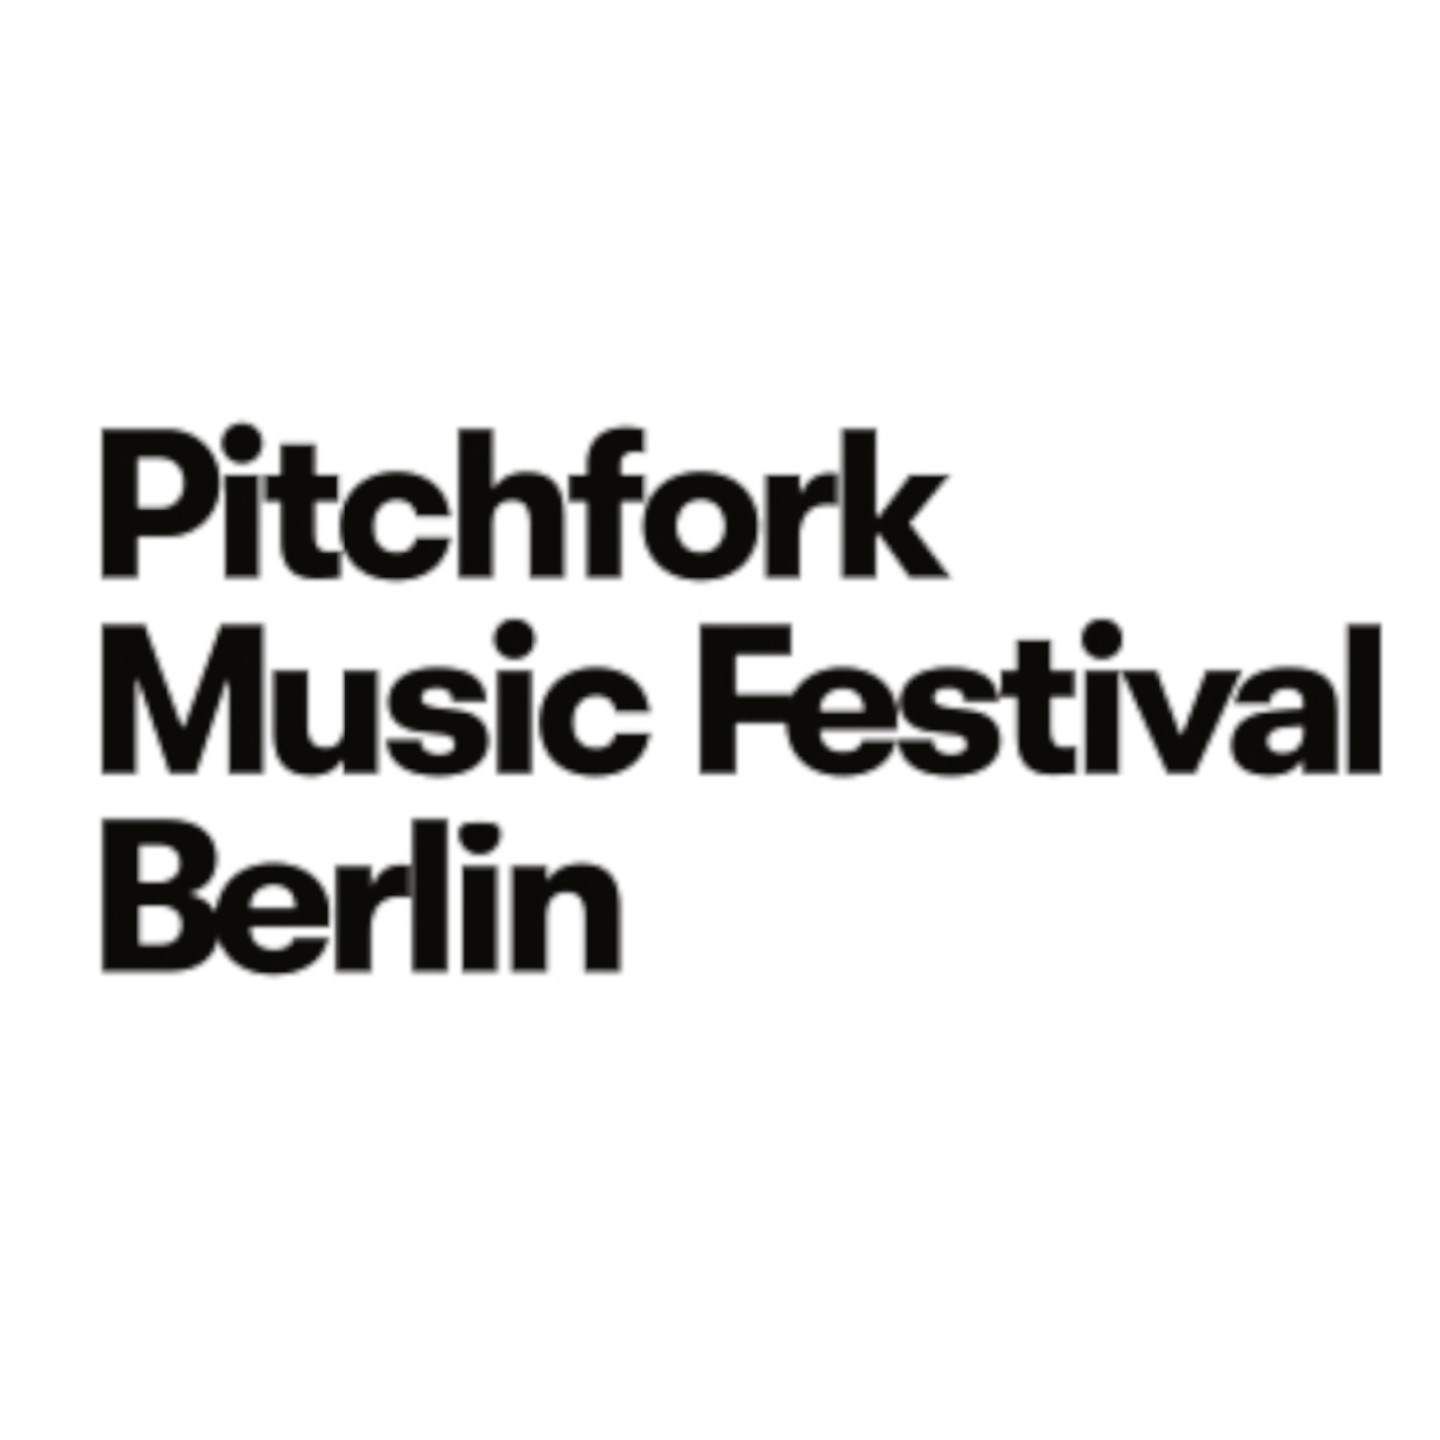 Pitchfork Music Festival Berlin · Upcoming Events, Tickets & News